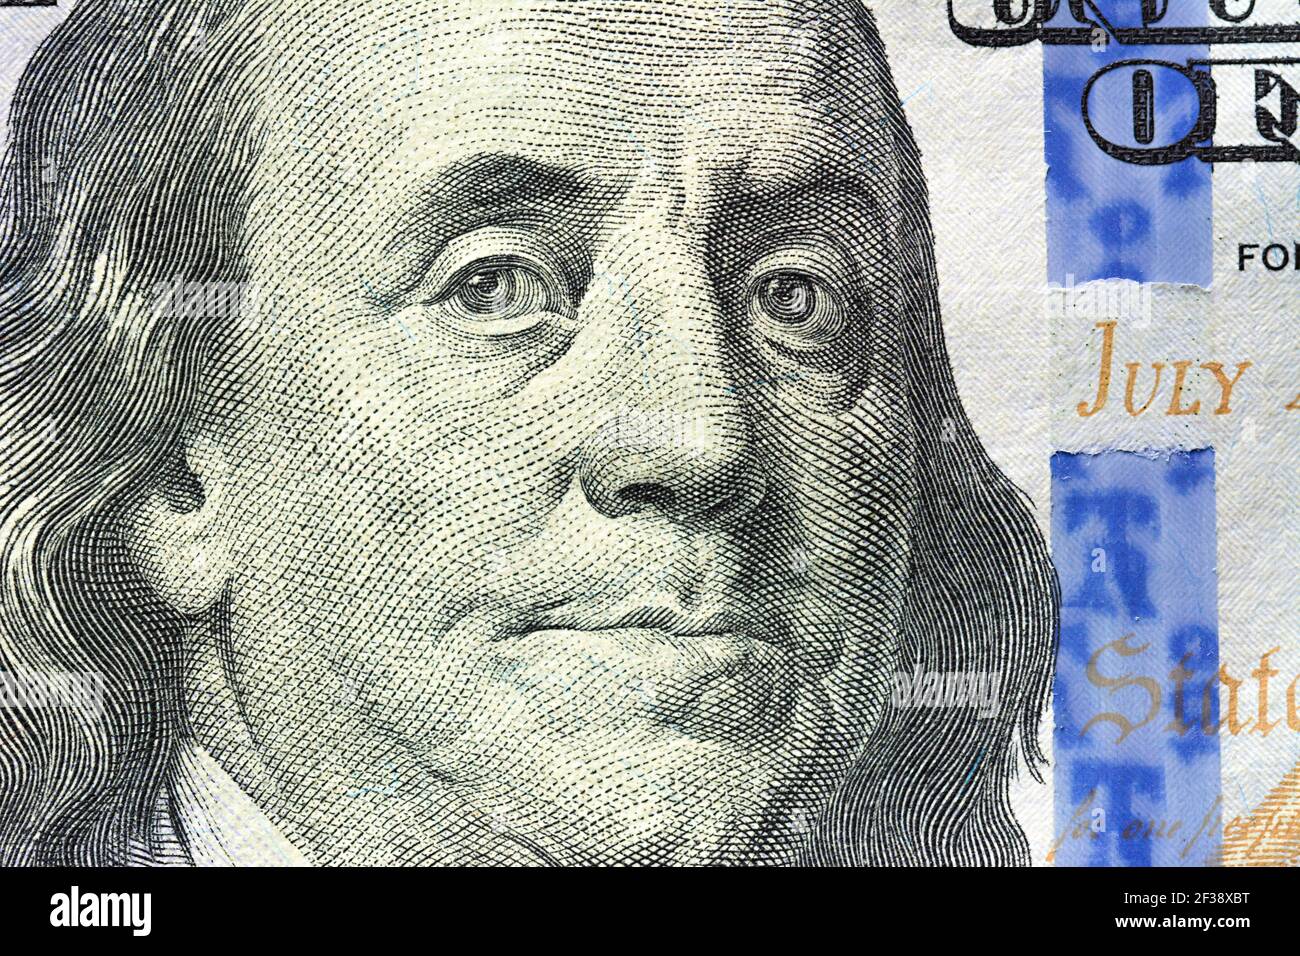 Close up of Benjamin Franklin face on 100 US dollar bill Stock Photo